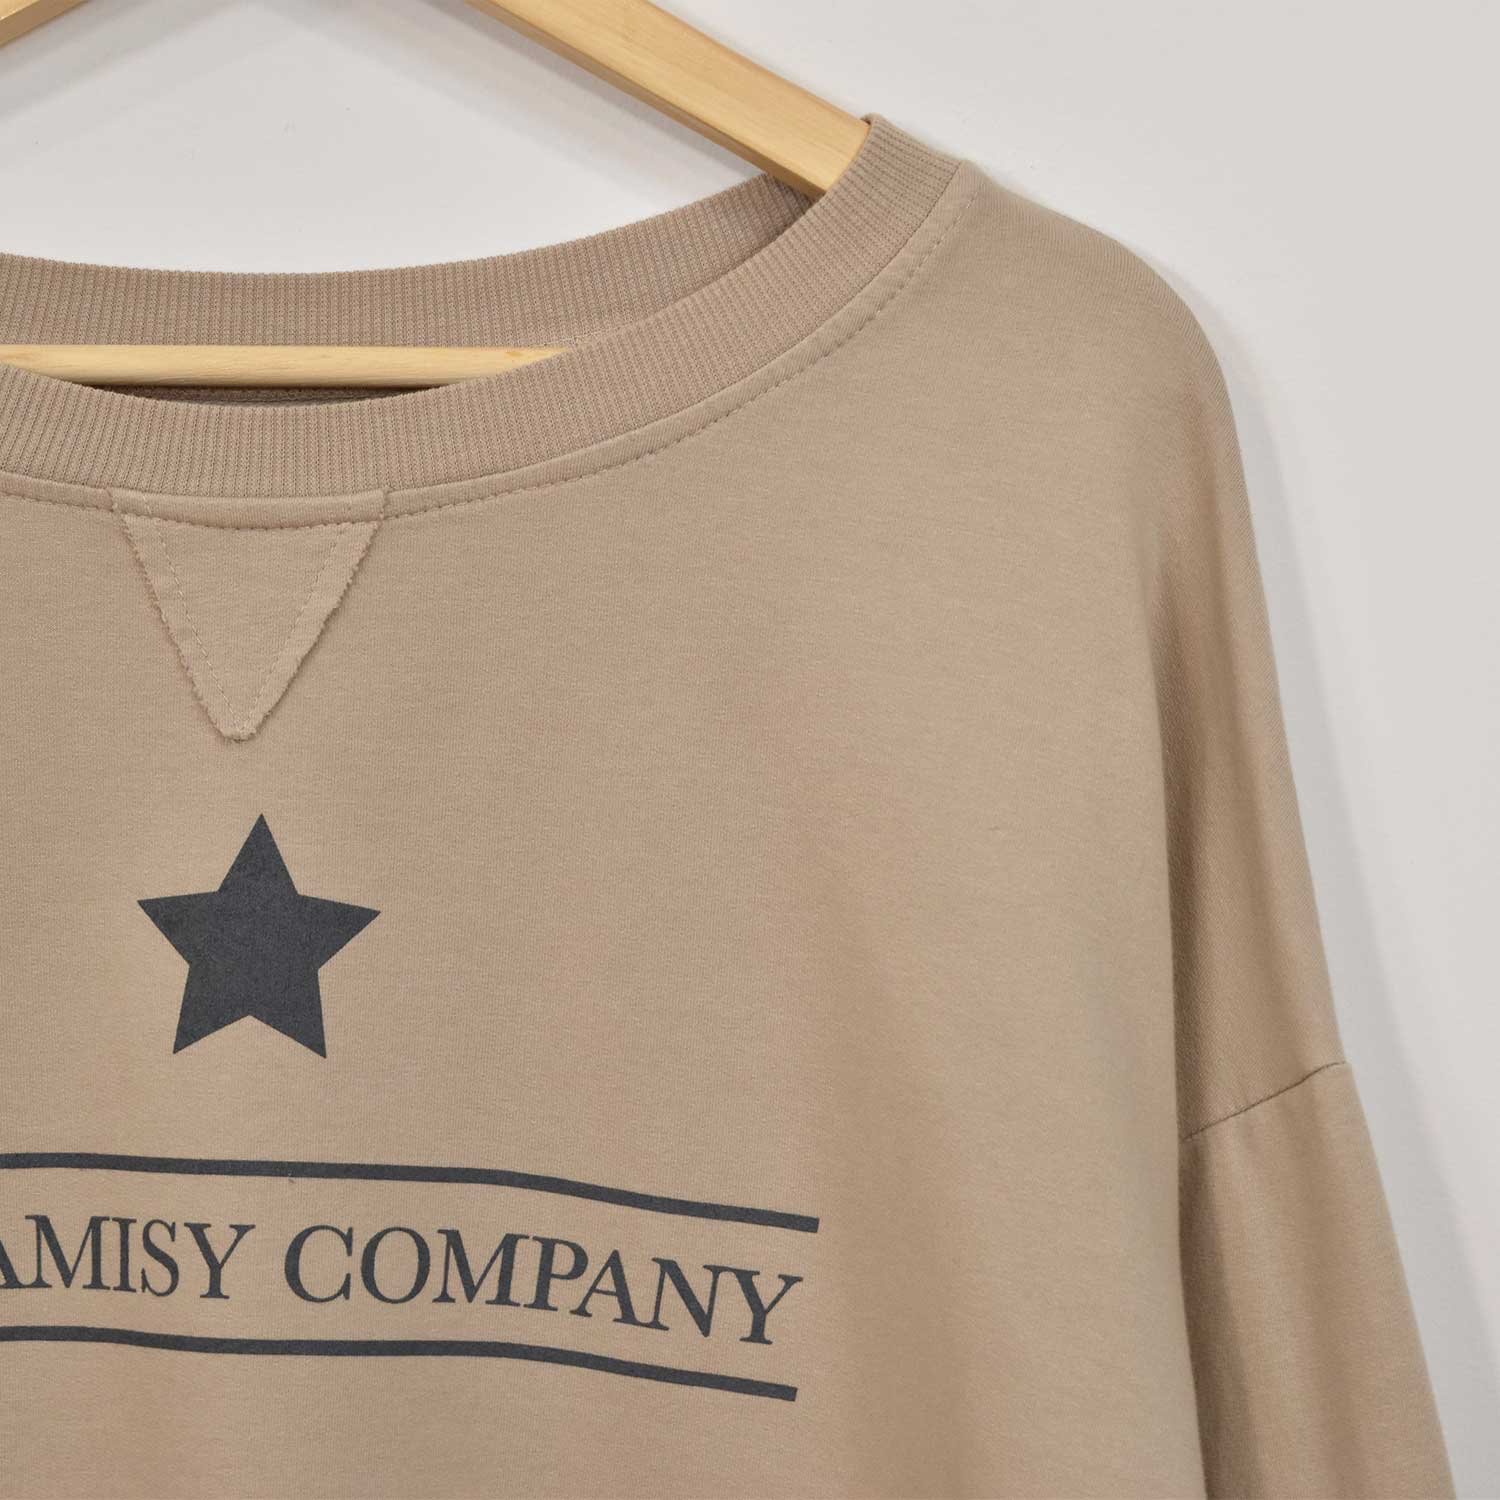 Beige Star Amisy sweatshirt